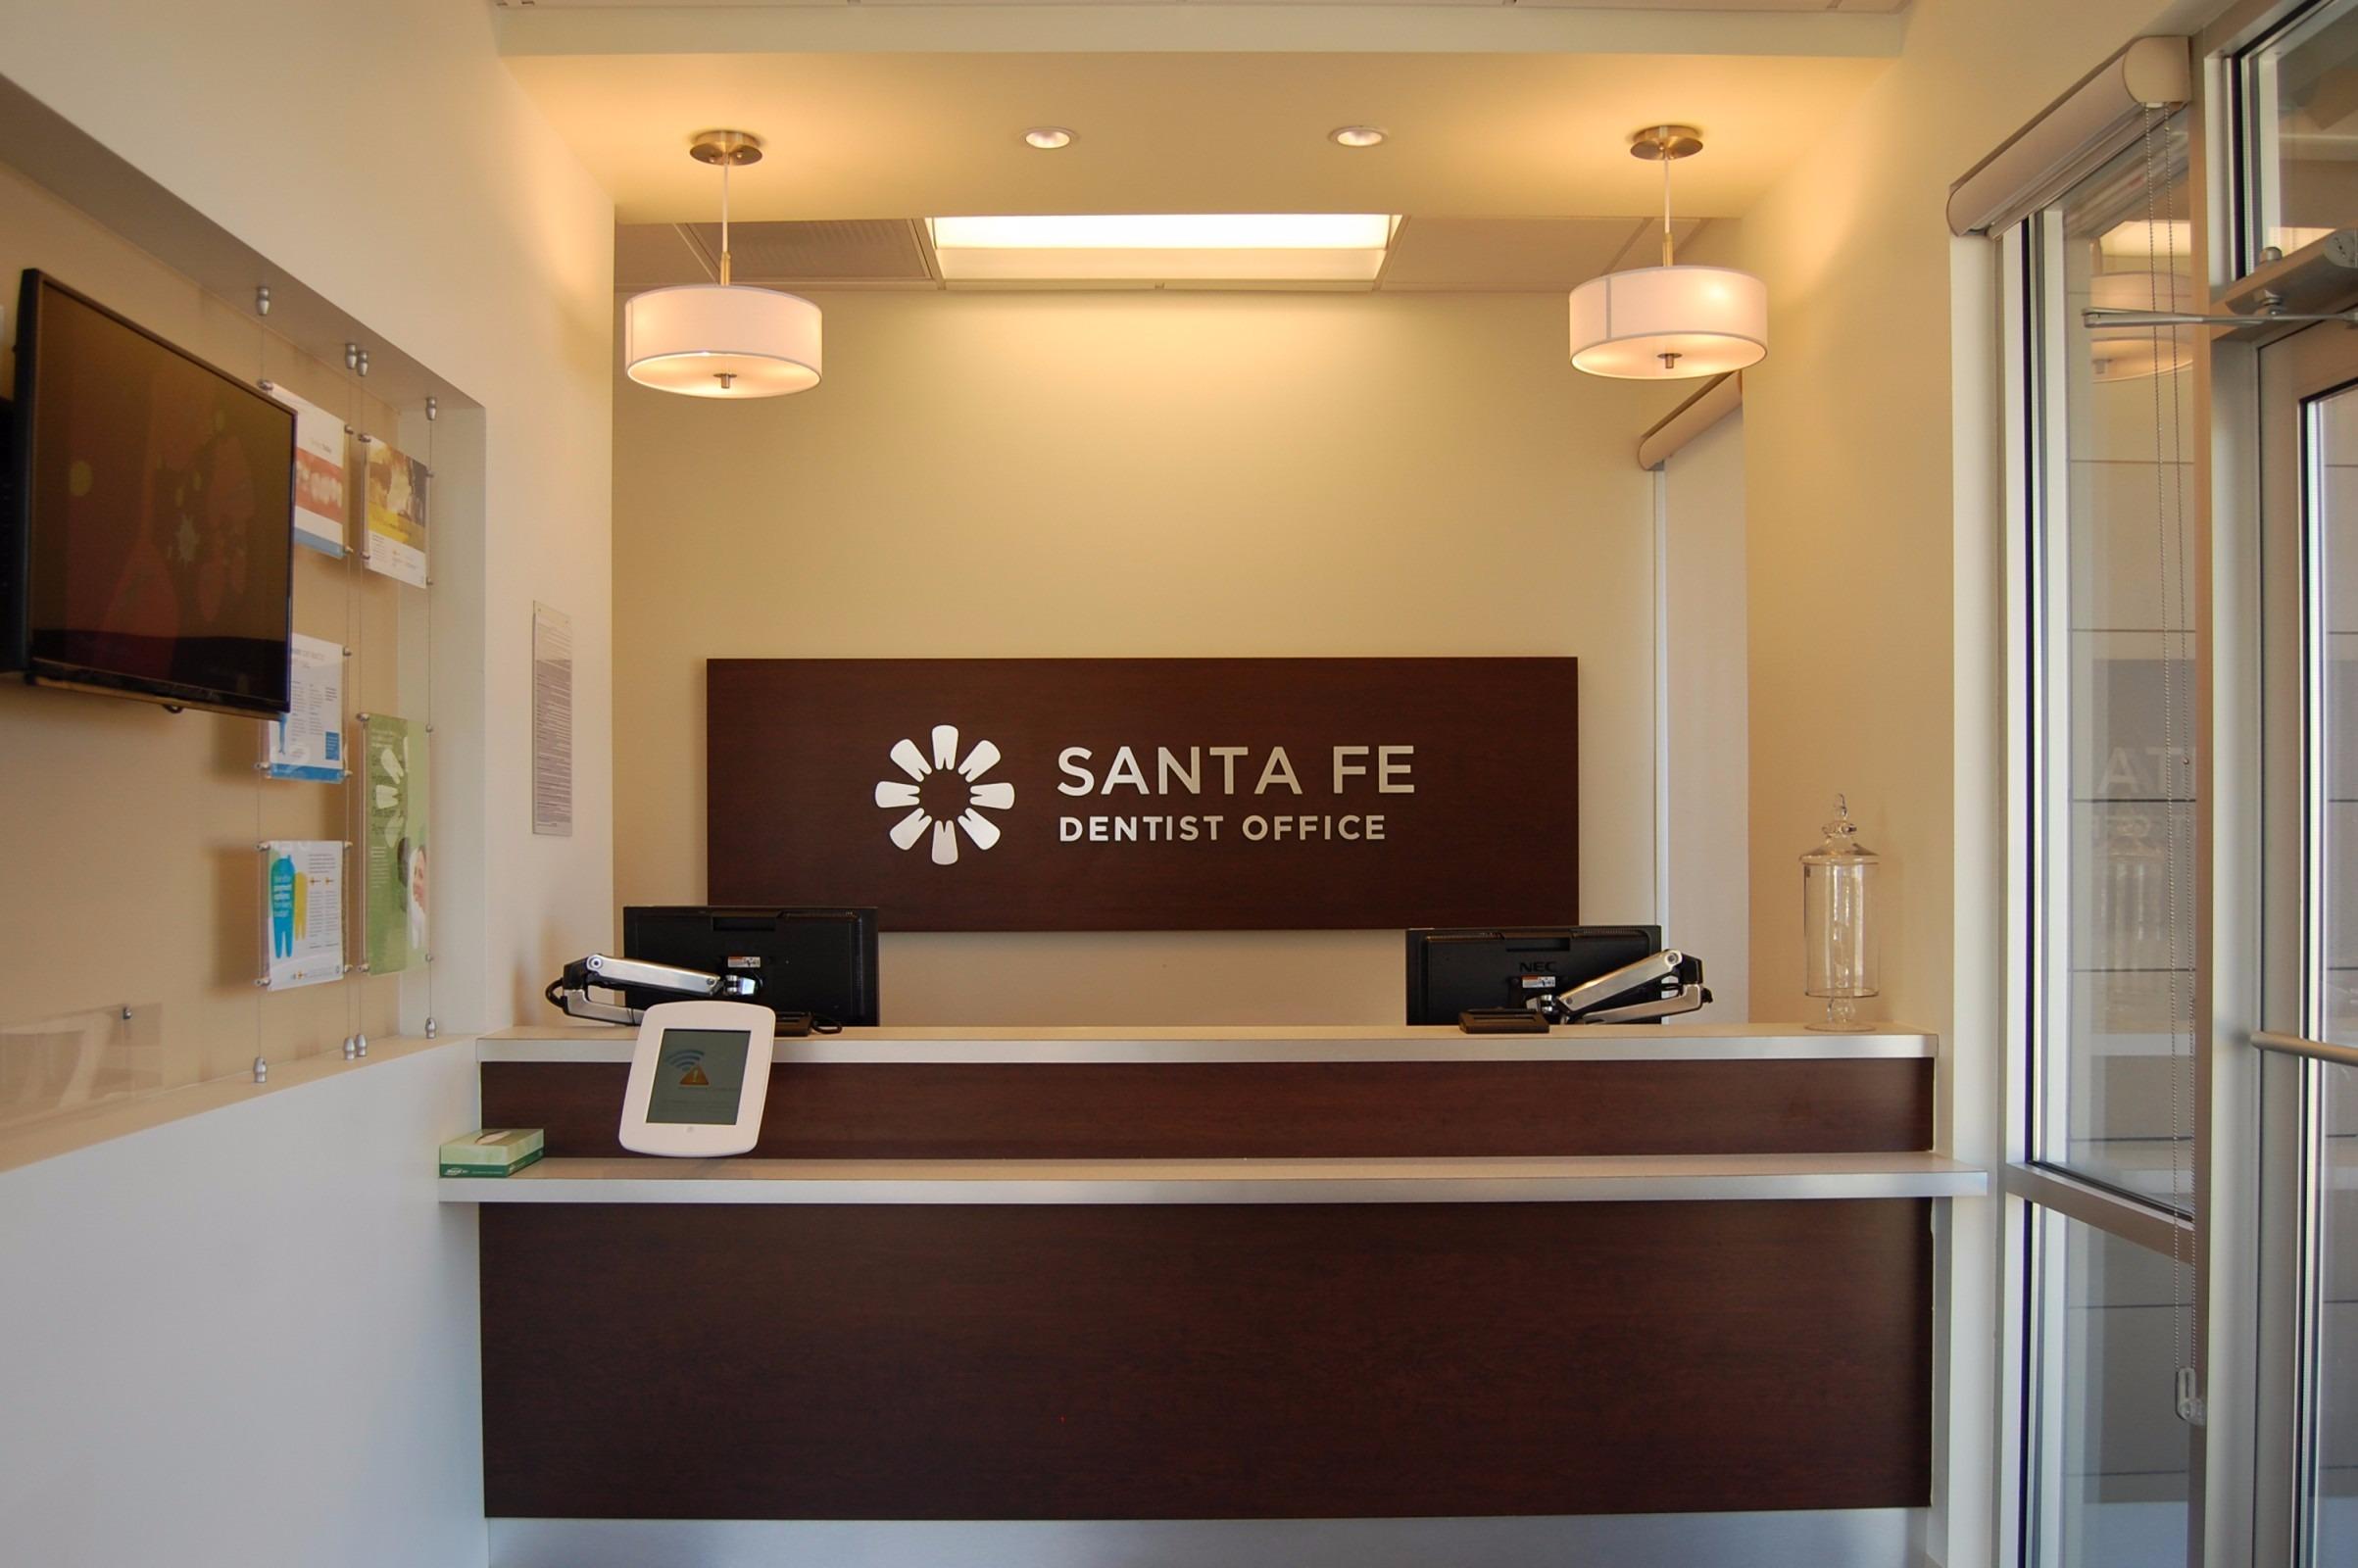 Santa Fe Dentist Office opened its doors to the Santa Fe community in April 2016.